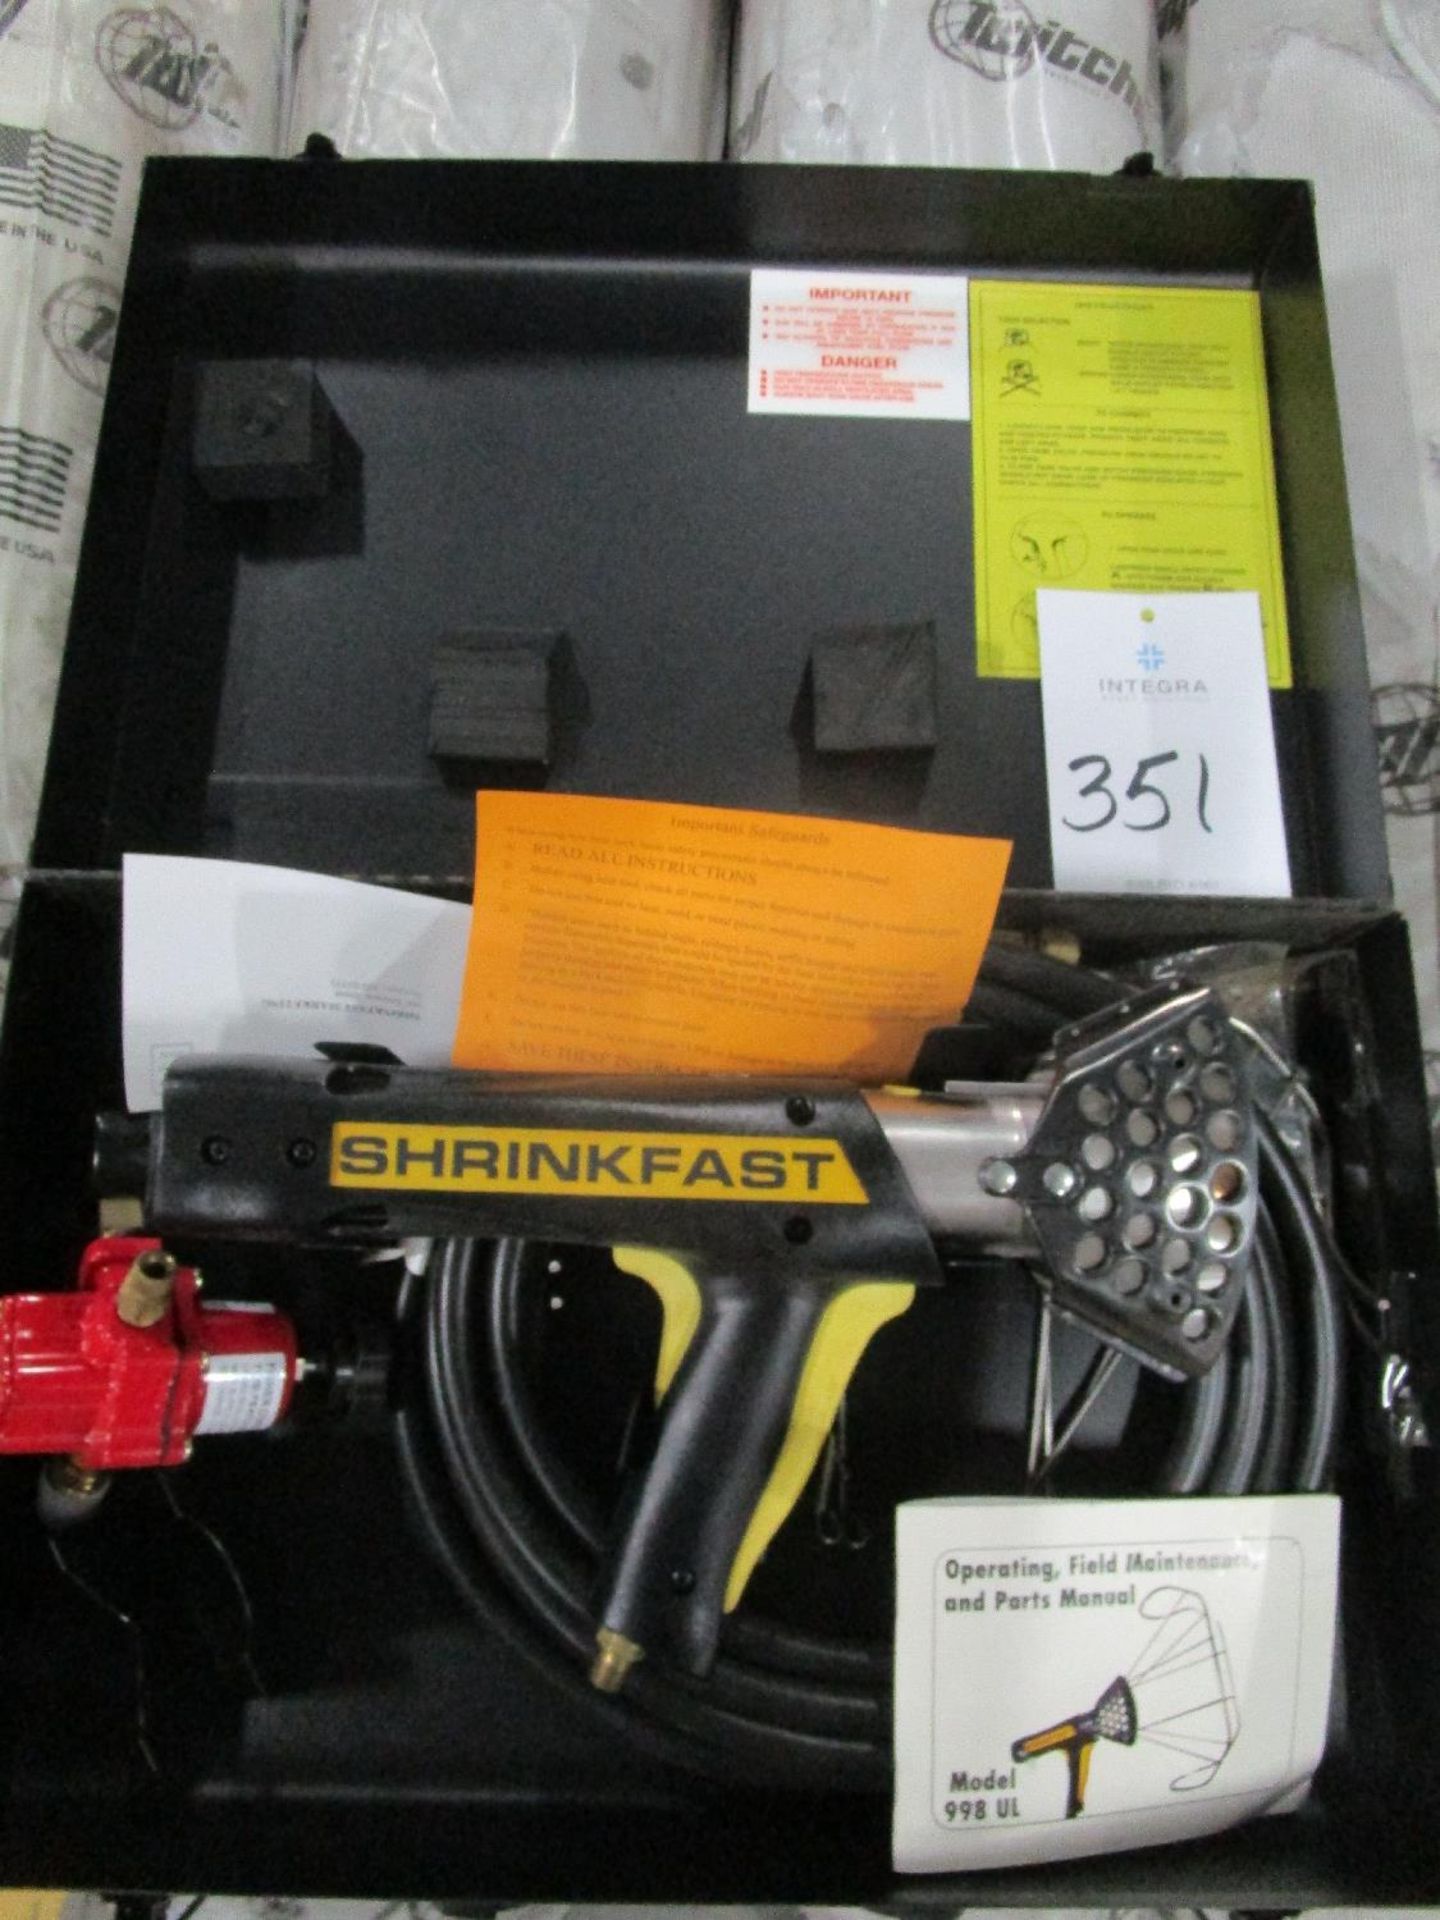 Shrinkfast 47G3 LP Gas Heat Shrin Torch Kit